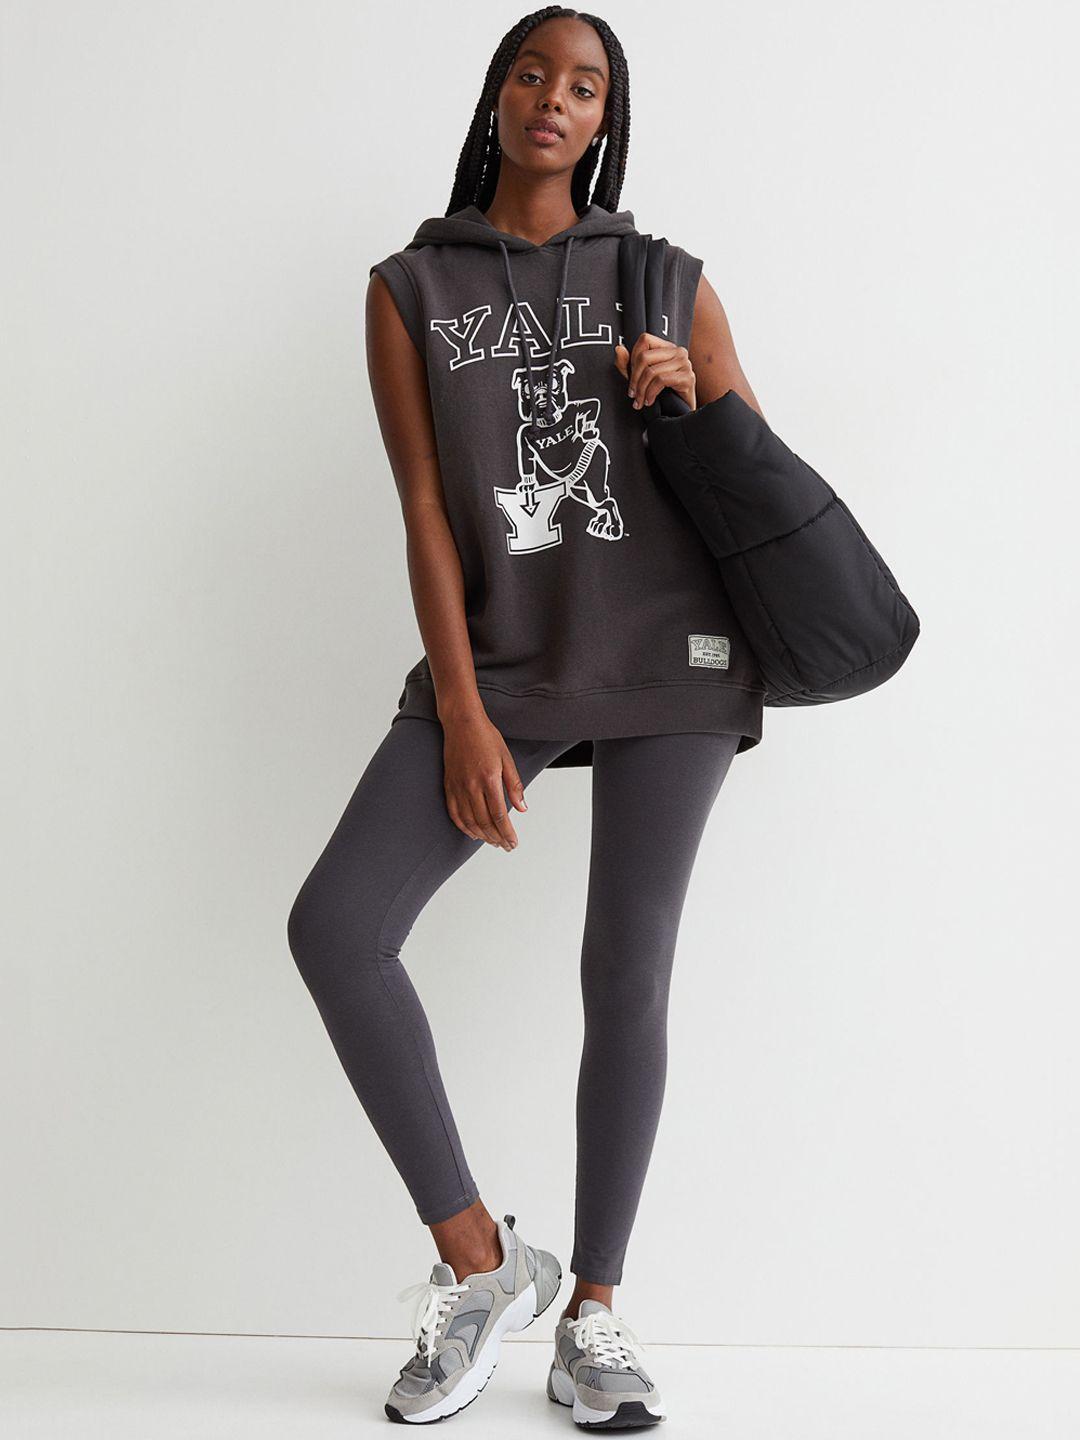 h&m-women-charcoal-printed-sleeveless-hoodie